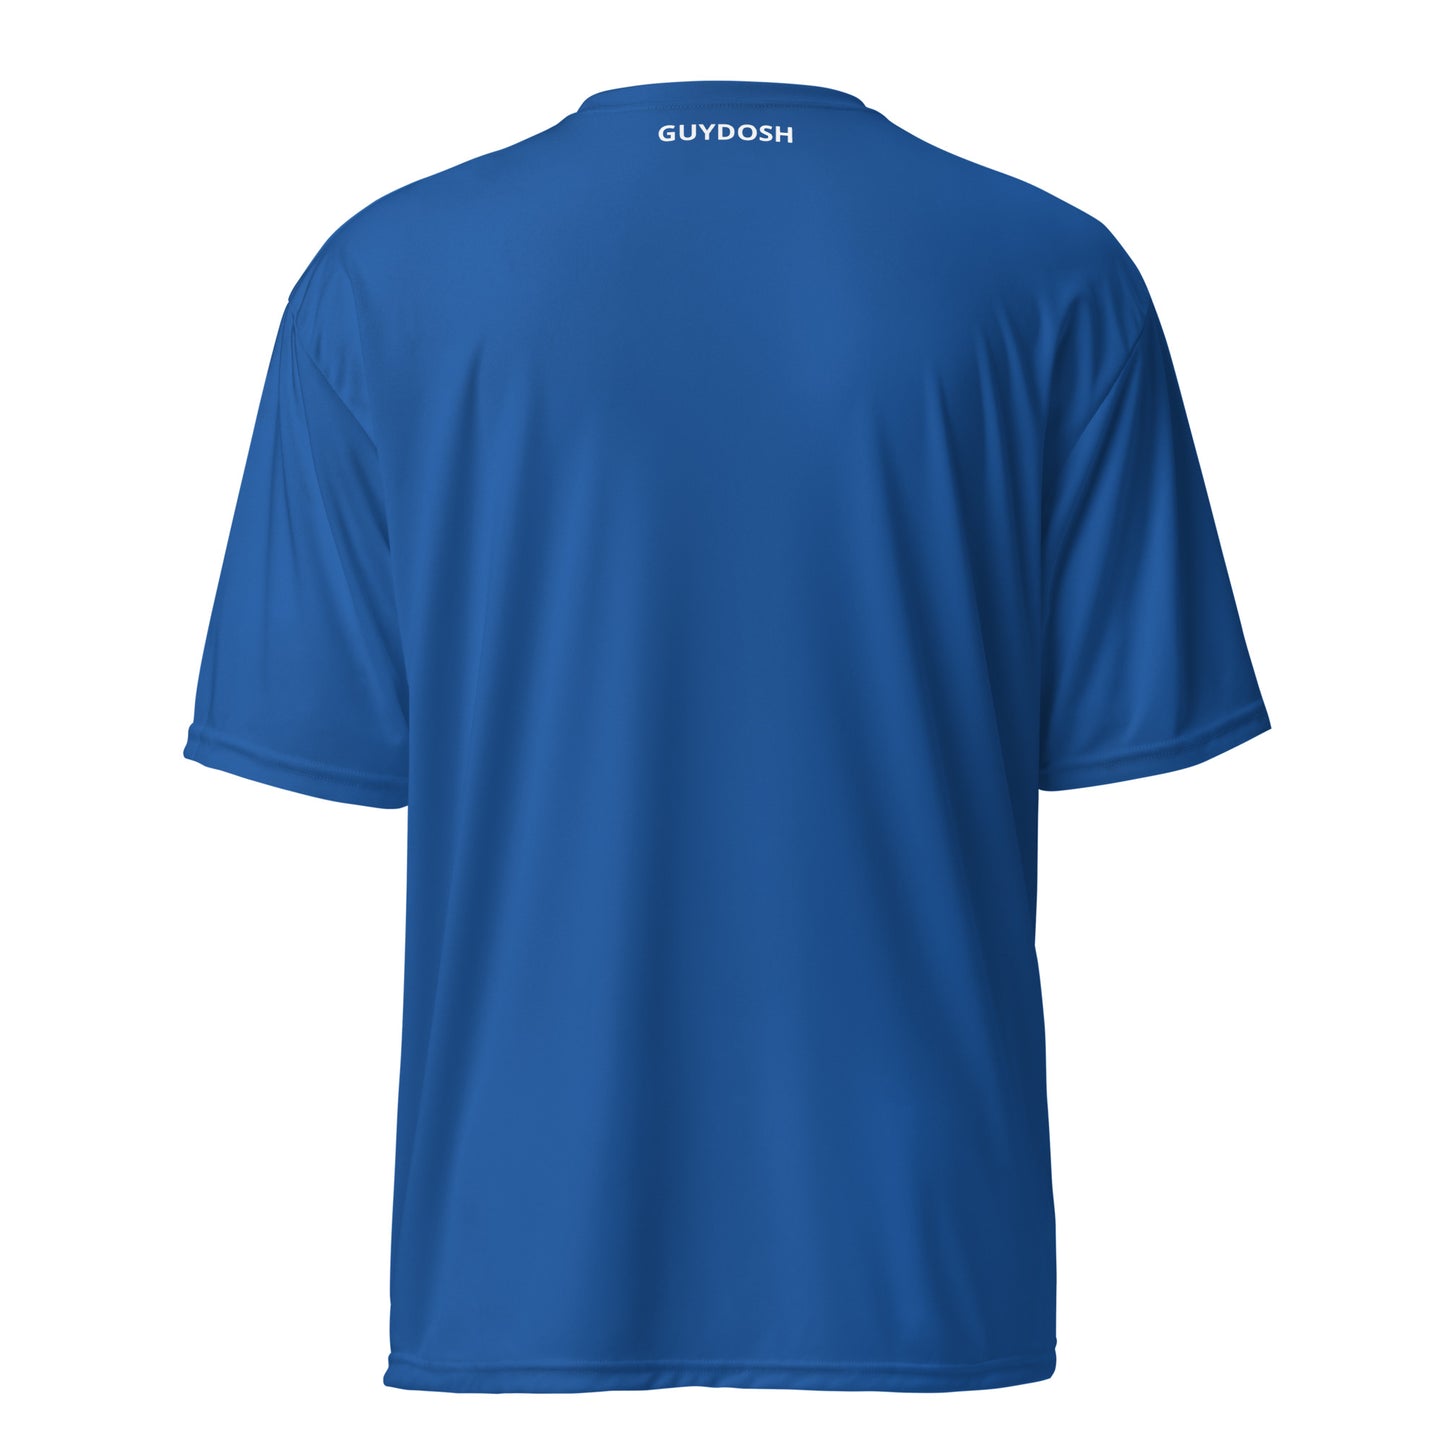 Unisex Inspiring crew neck t-shirt